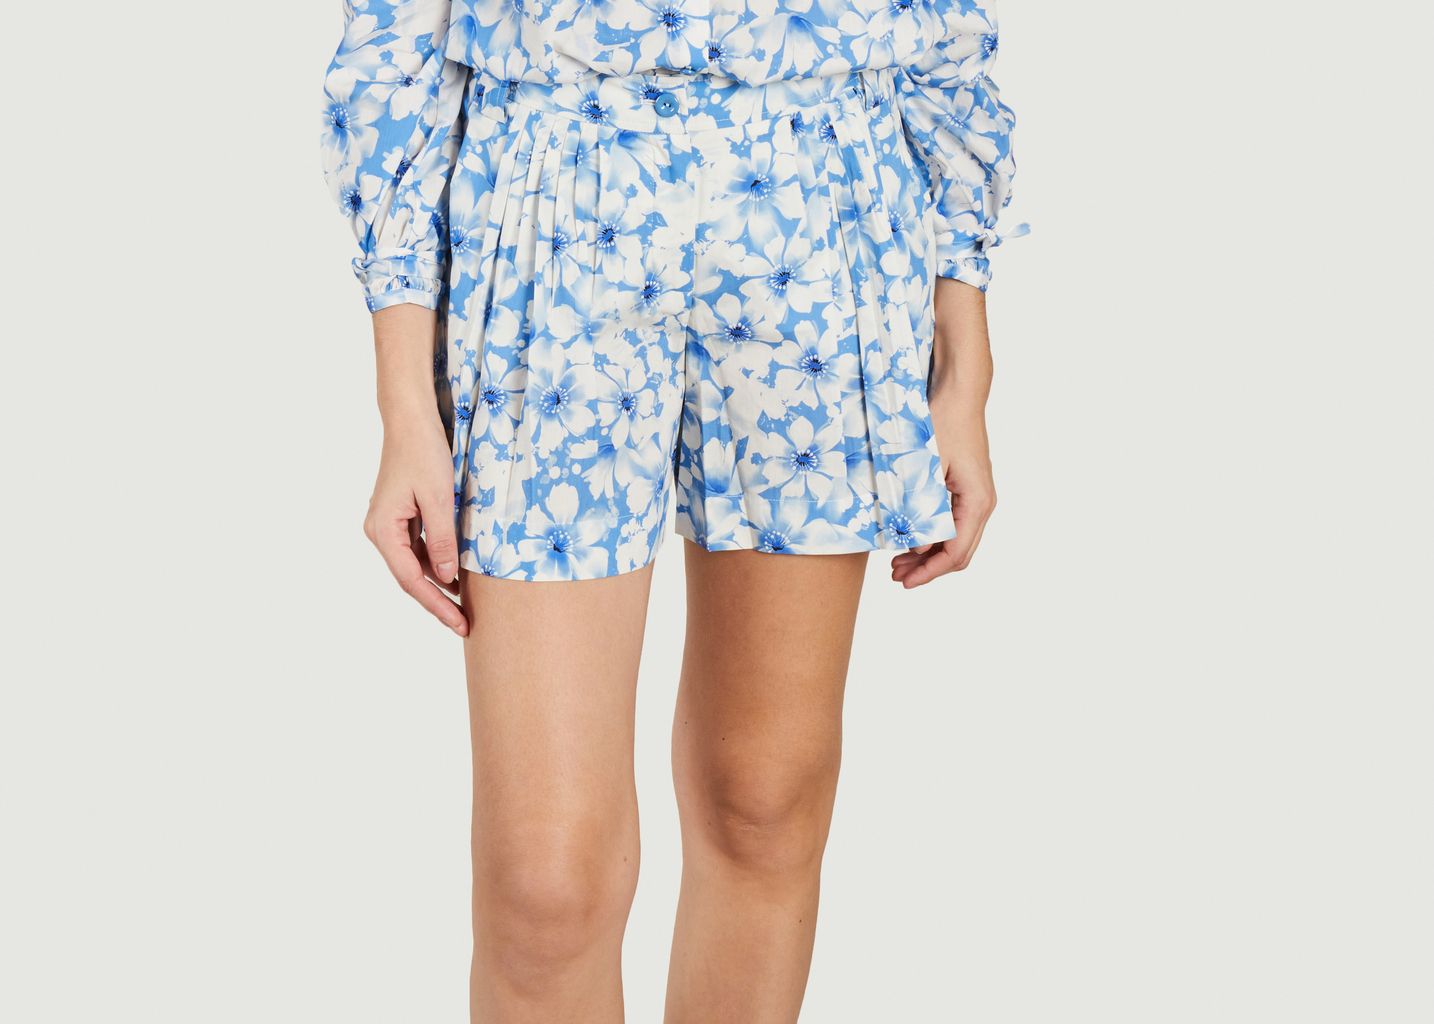 Selena floral print shorts - Tara Jarmon